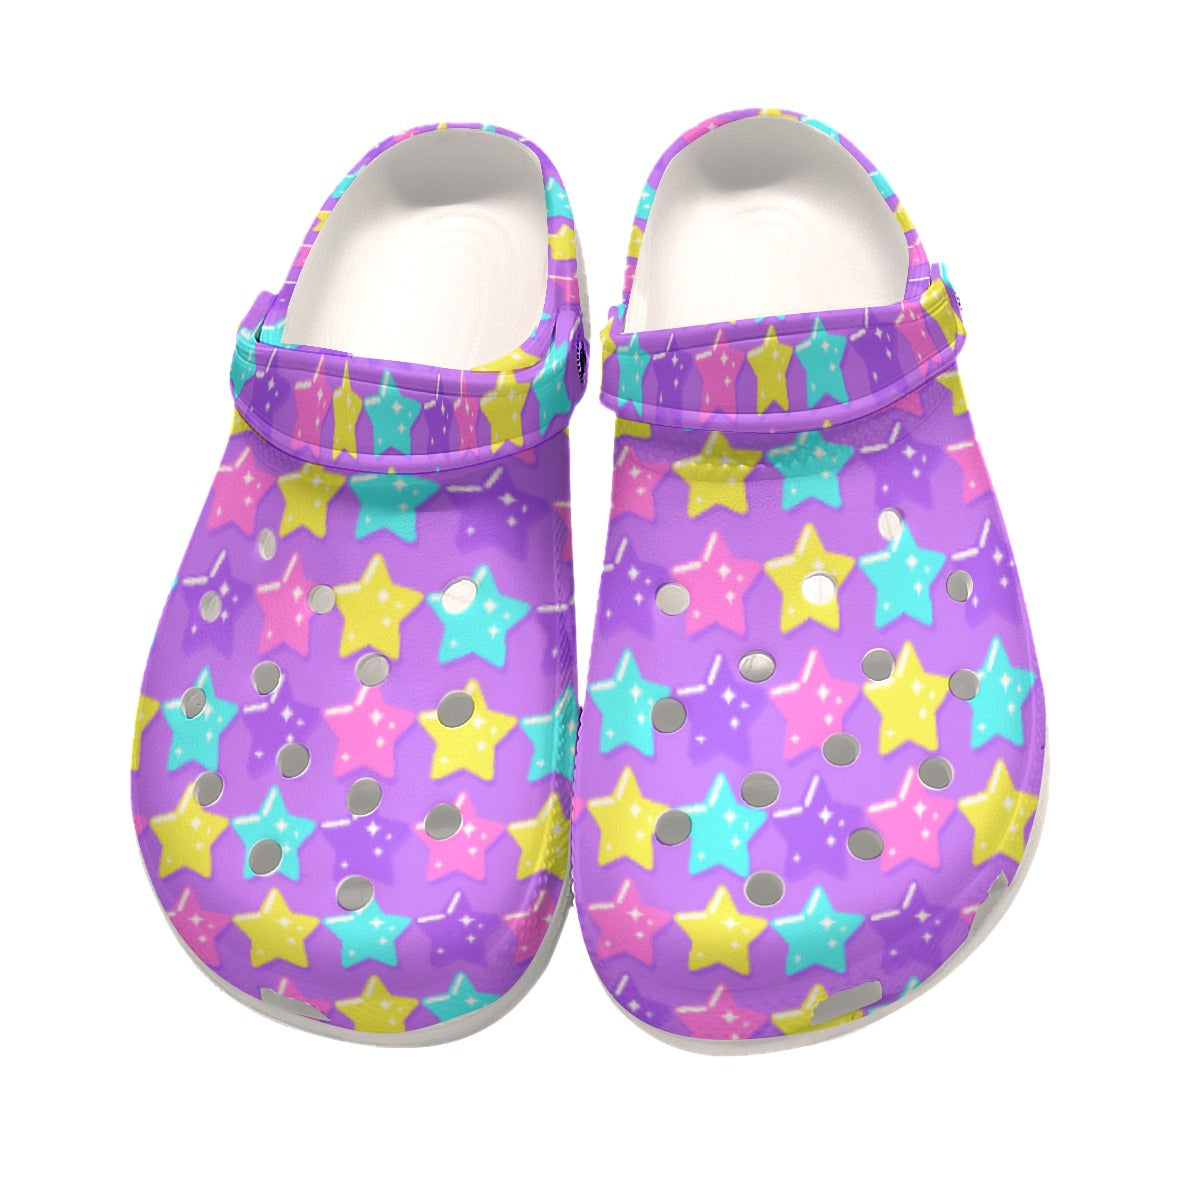 Electric Star Wave Purple Classic Clogs Women's Shoes